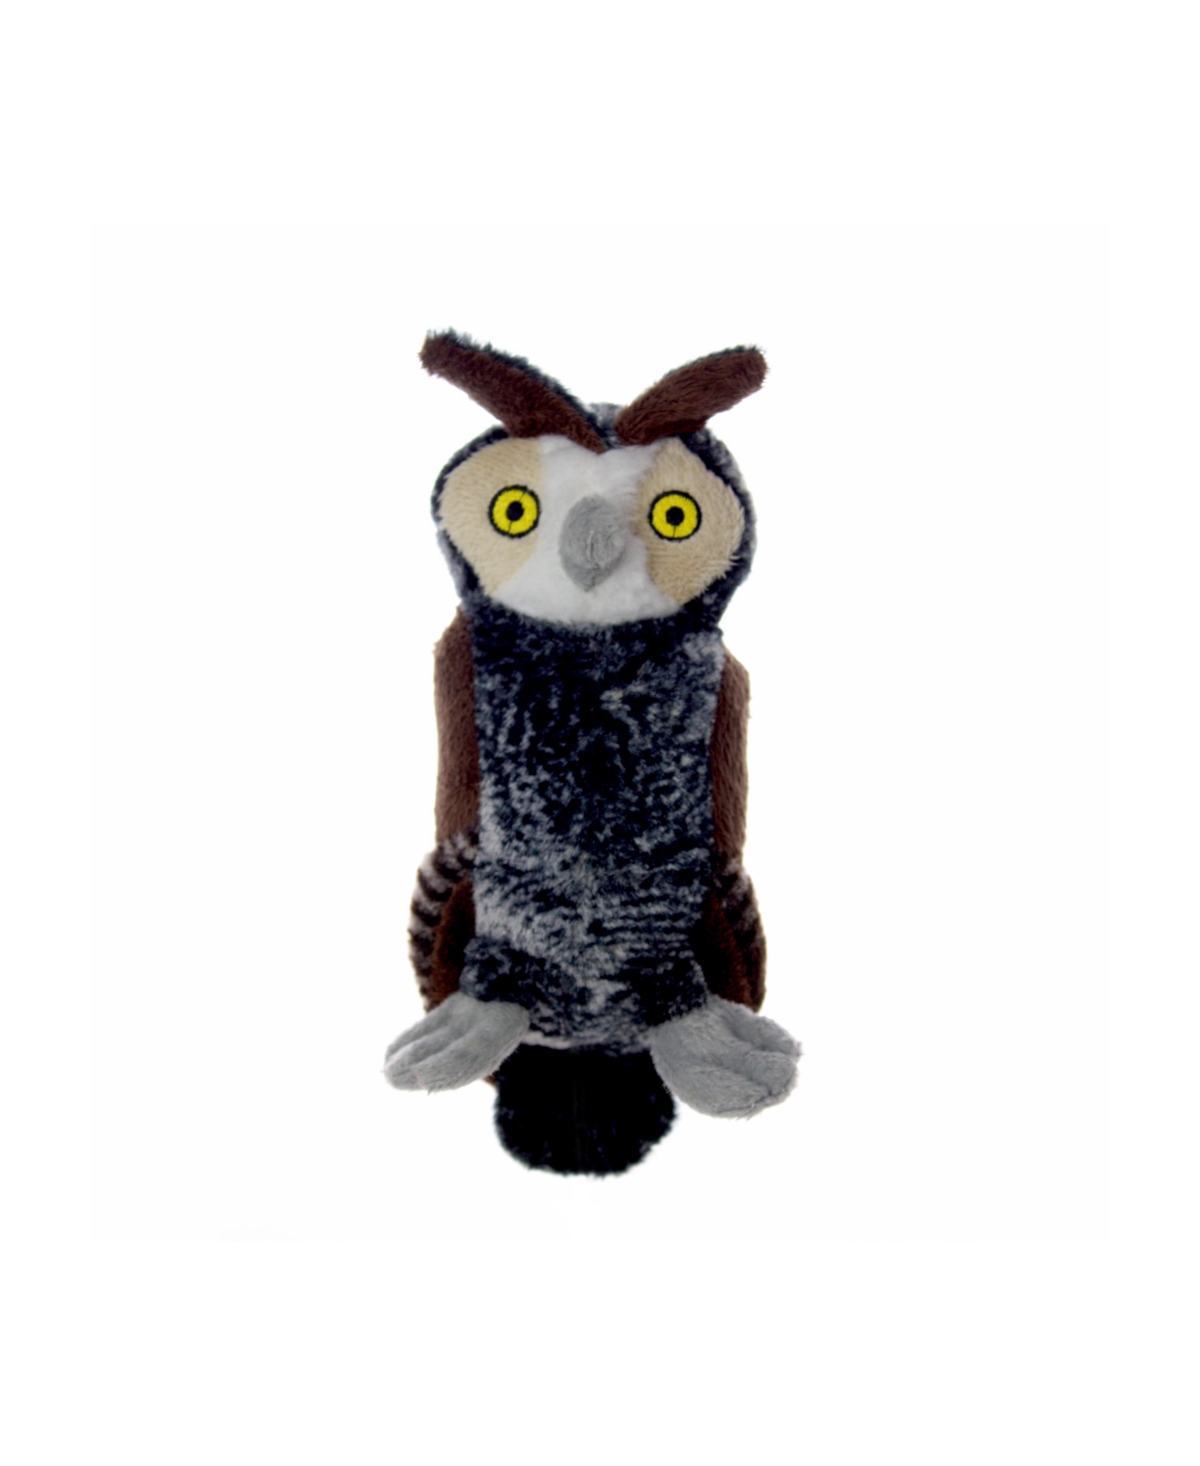 Jr Nature Owl, Dog Toy - Brown